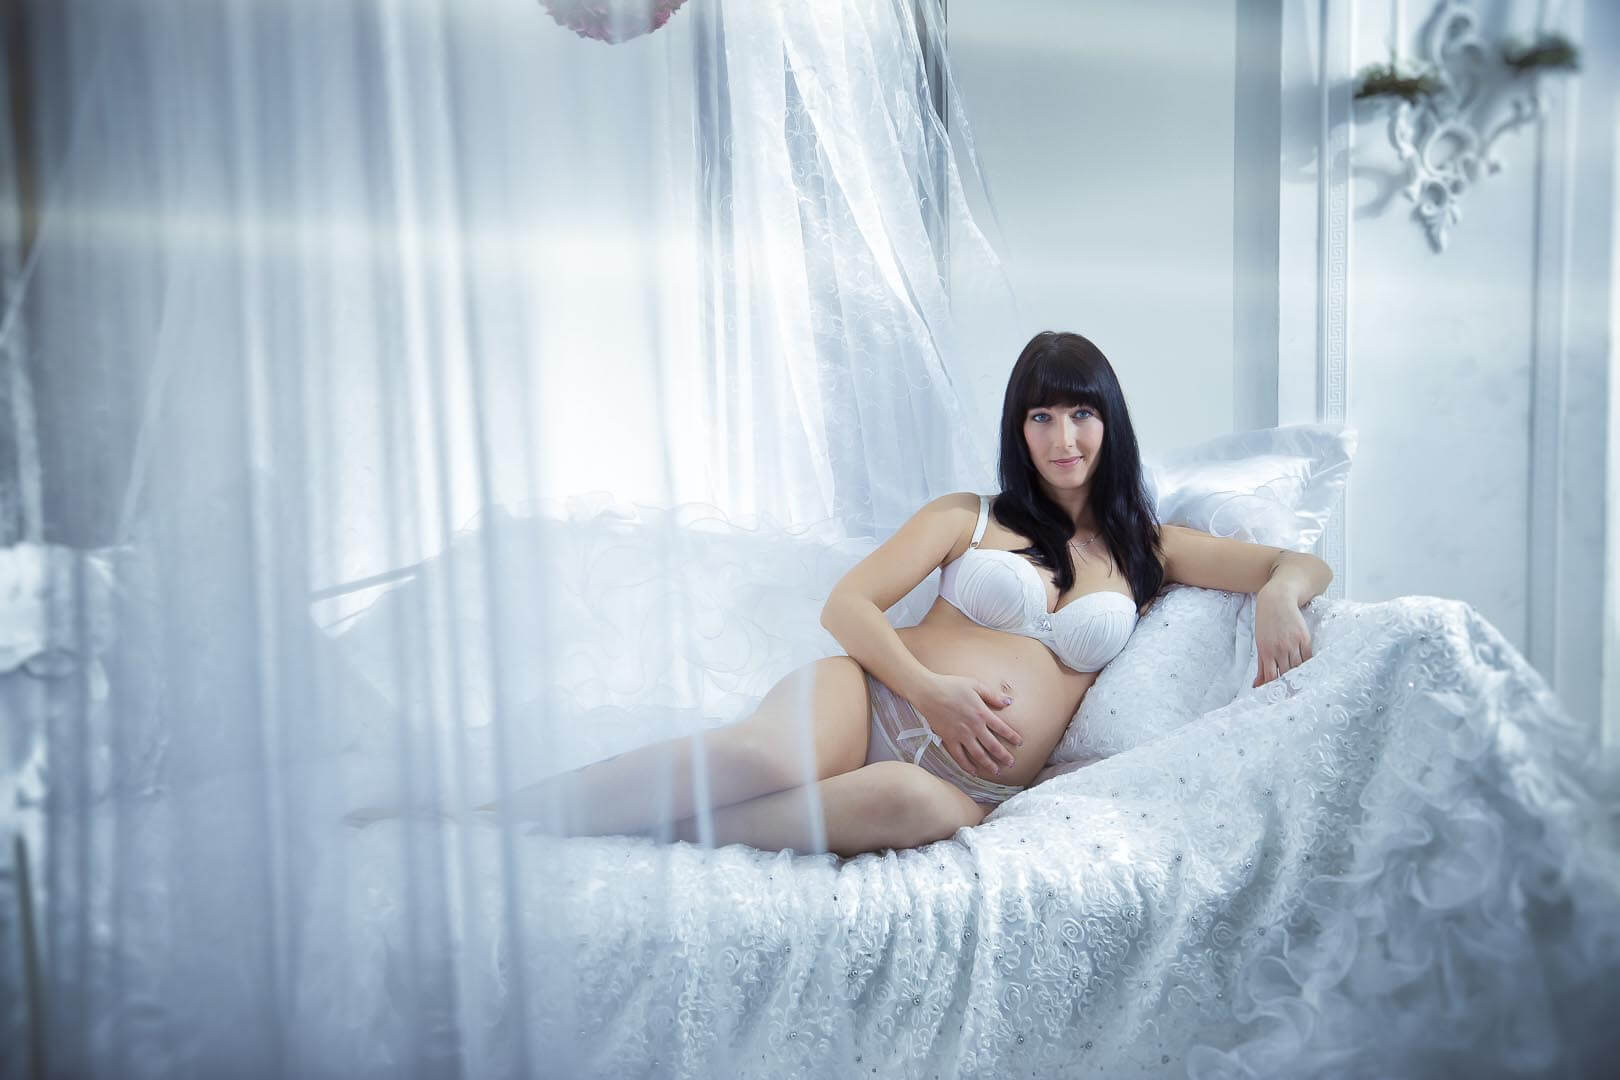 Fotostudio-Dresden-Boudoir-Dessous-Corsage-Pregnant-Styling-Make up-Bedroom- Rose-Private-Schmuck